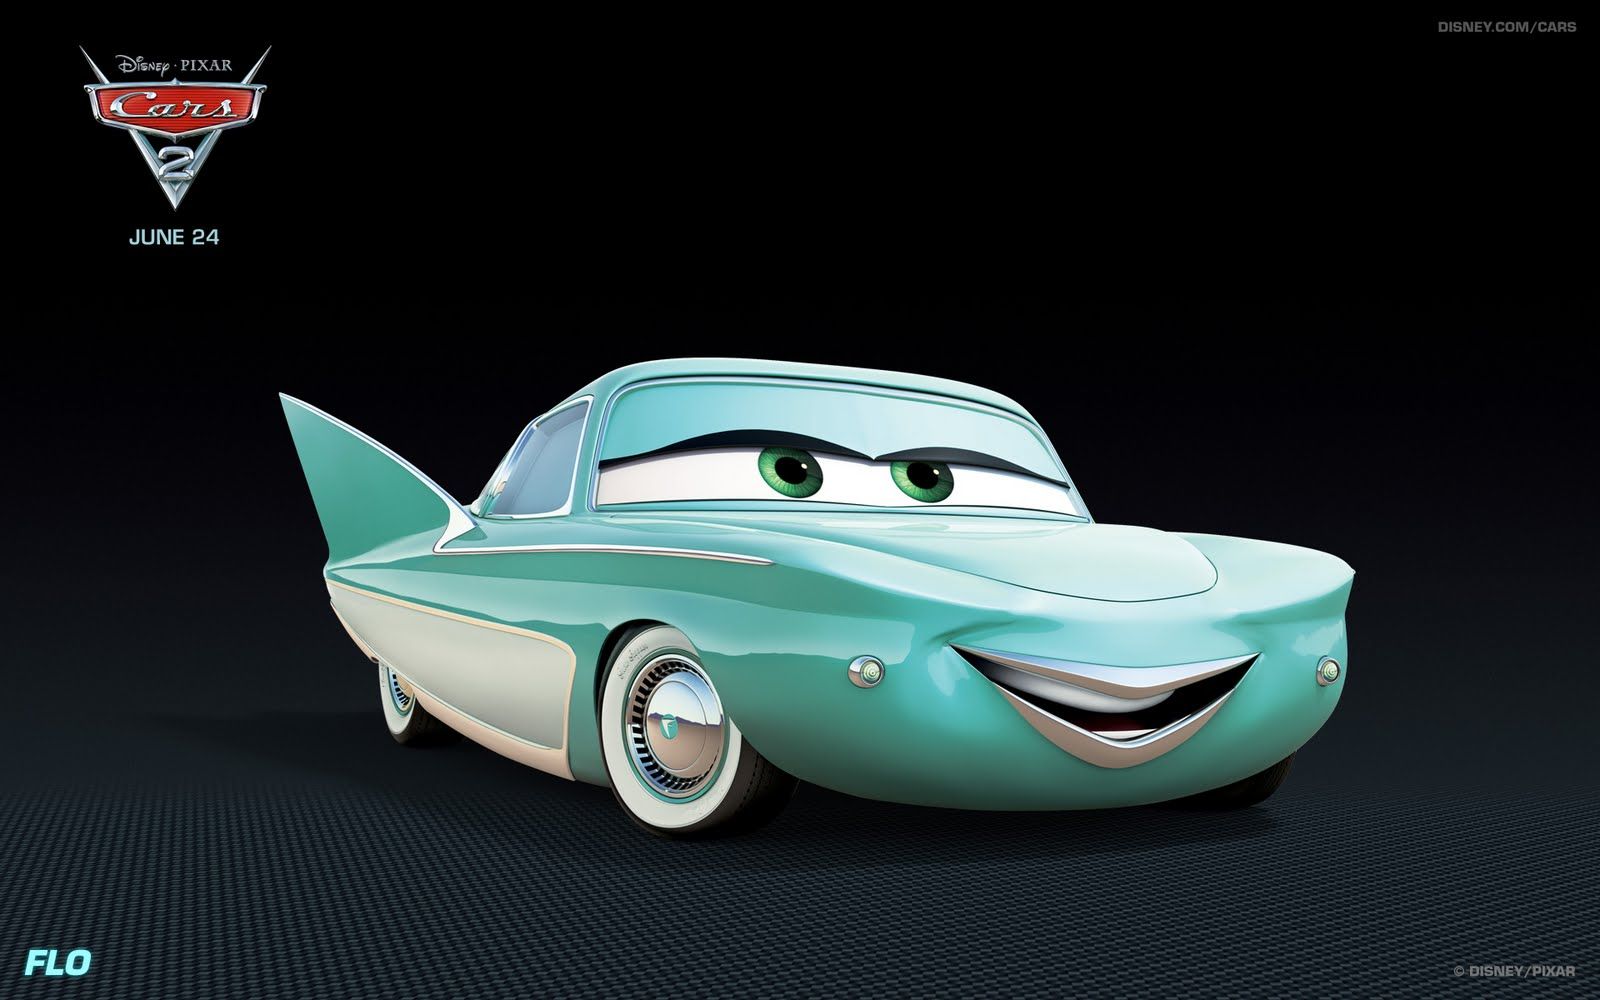 Disney Cars 2 Toys: Disney Cars 2 Desktop Wallpaper Flo